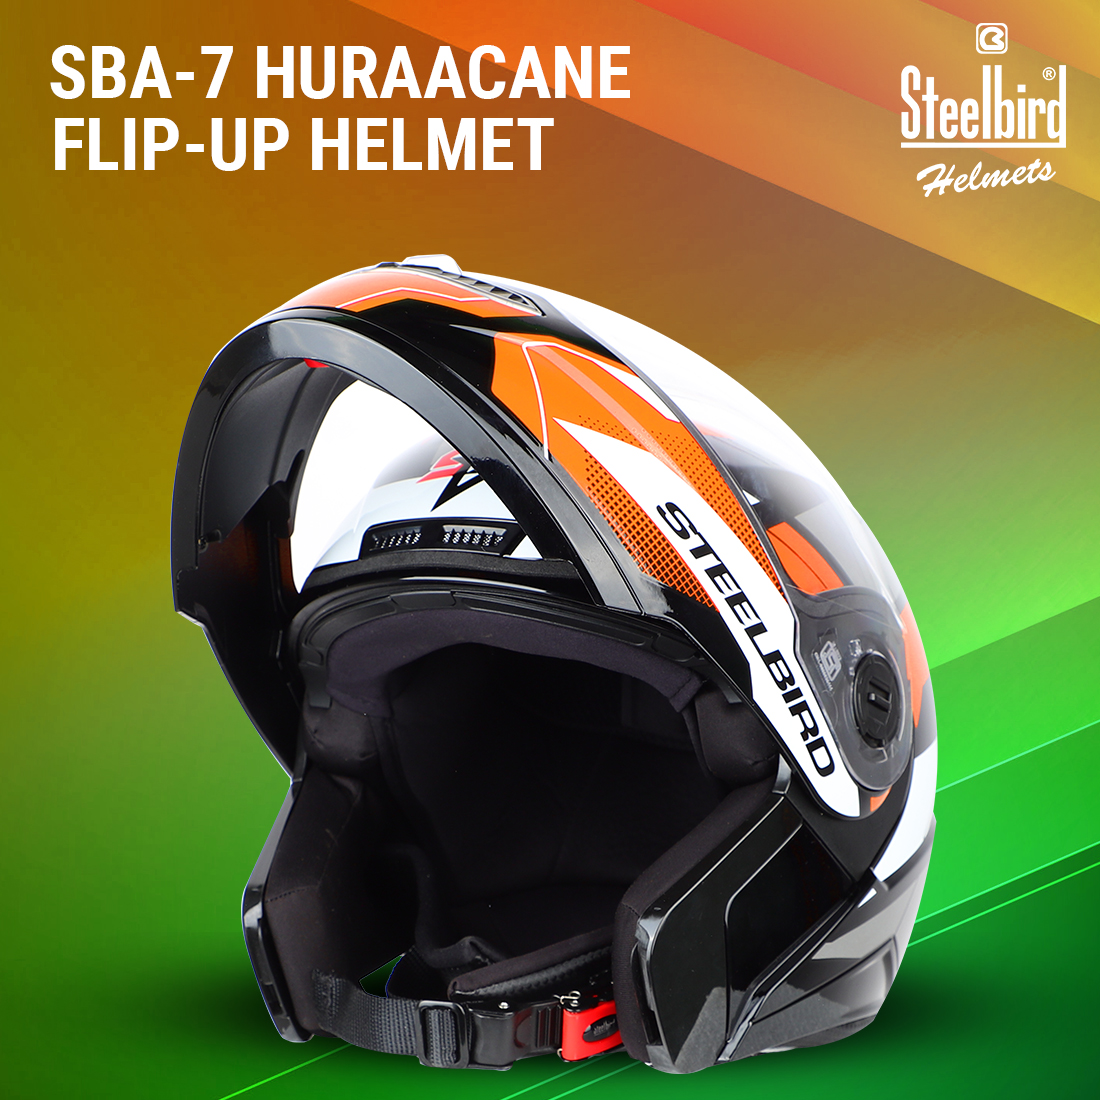 Steelbird SBA-7 Huracan ISI Certified Flip-Up Helmet For Men And Women (Glossy Black Orange With Clear Visor)